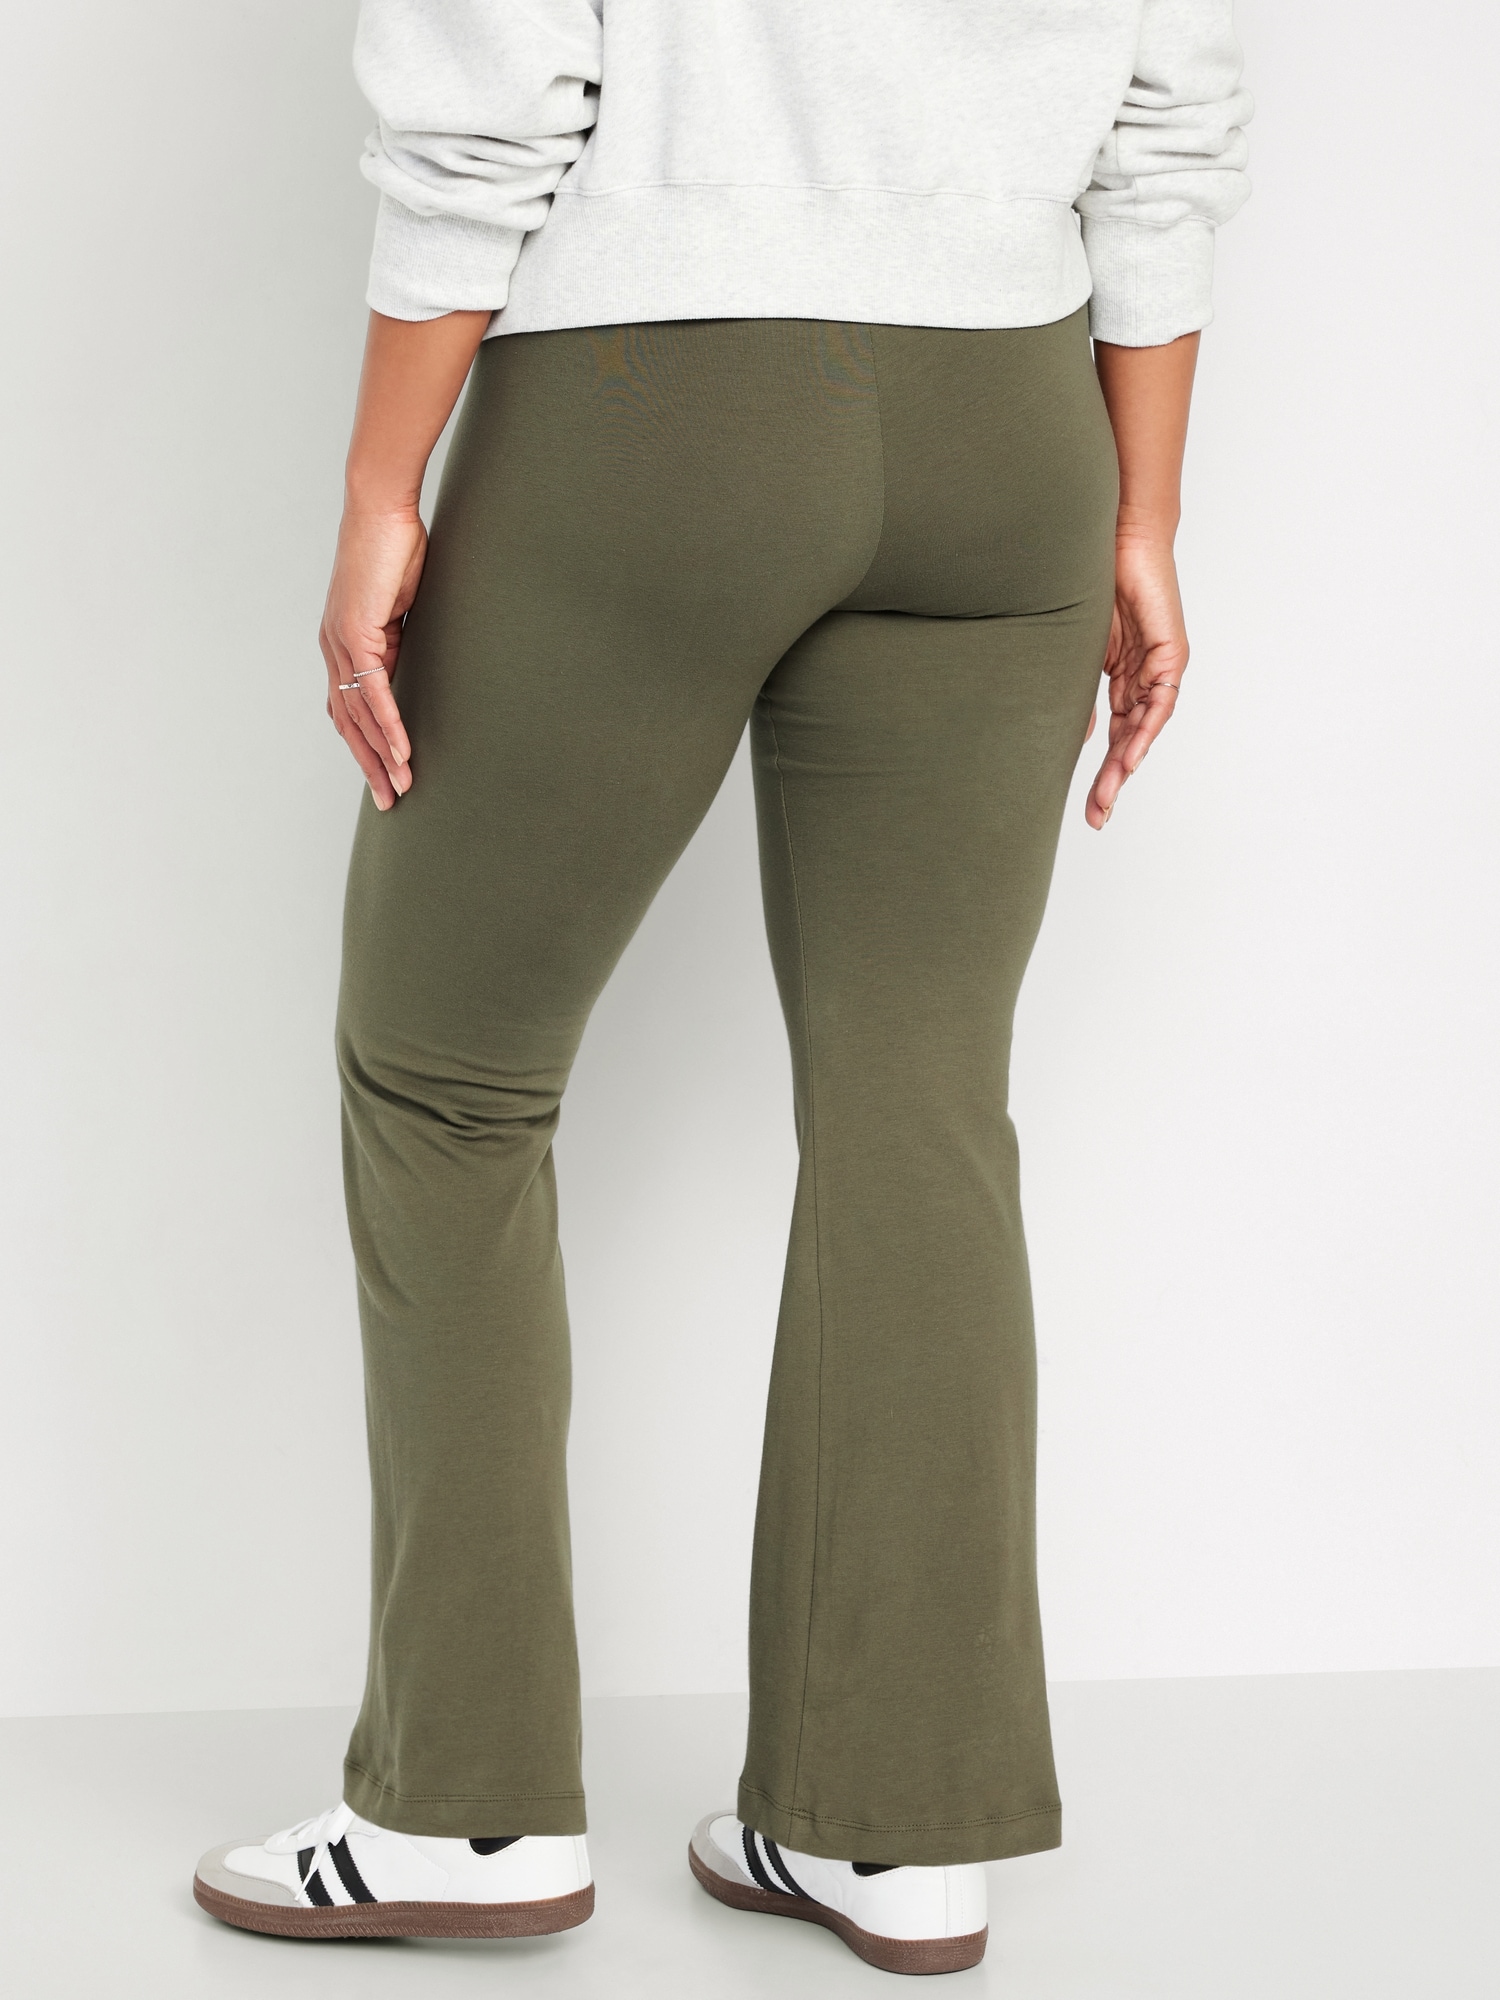  Warehouse  Warehouse Deals Yoga Pants Plus Size High  Waisted Leggings for Women Crossover Yoga Pants Slit Cut Flare Leg Bootcut  Sports Leggings Bell Bottom Pants Army Green S : Clothing